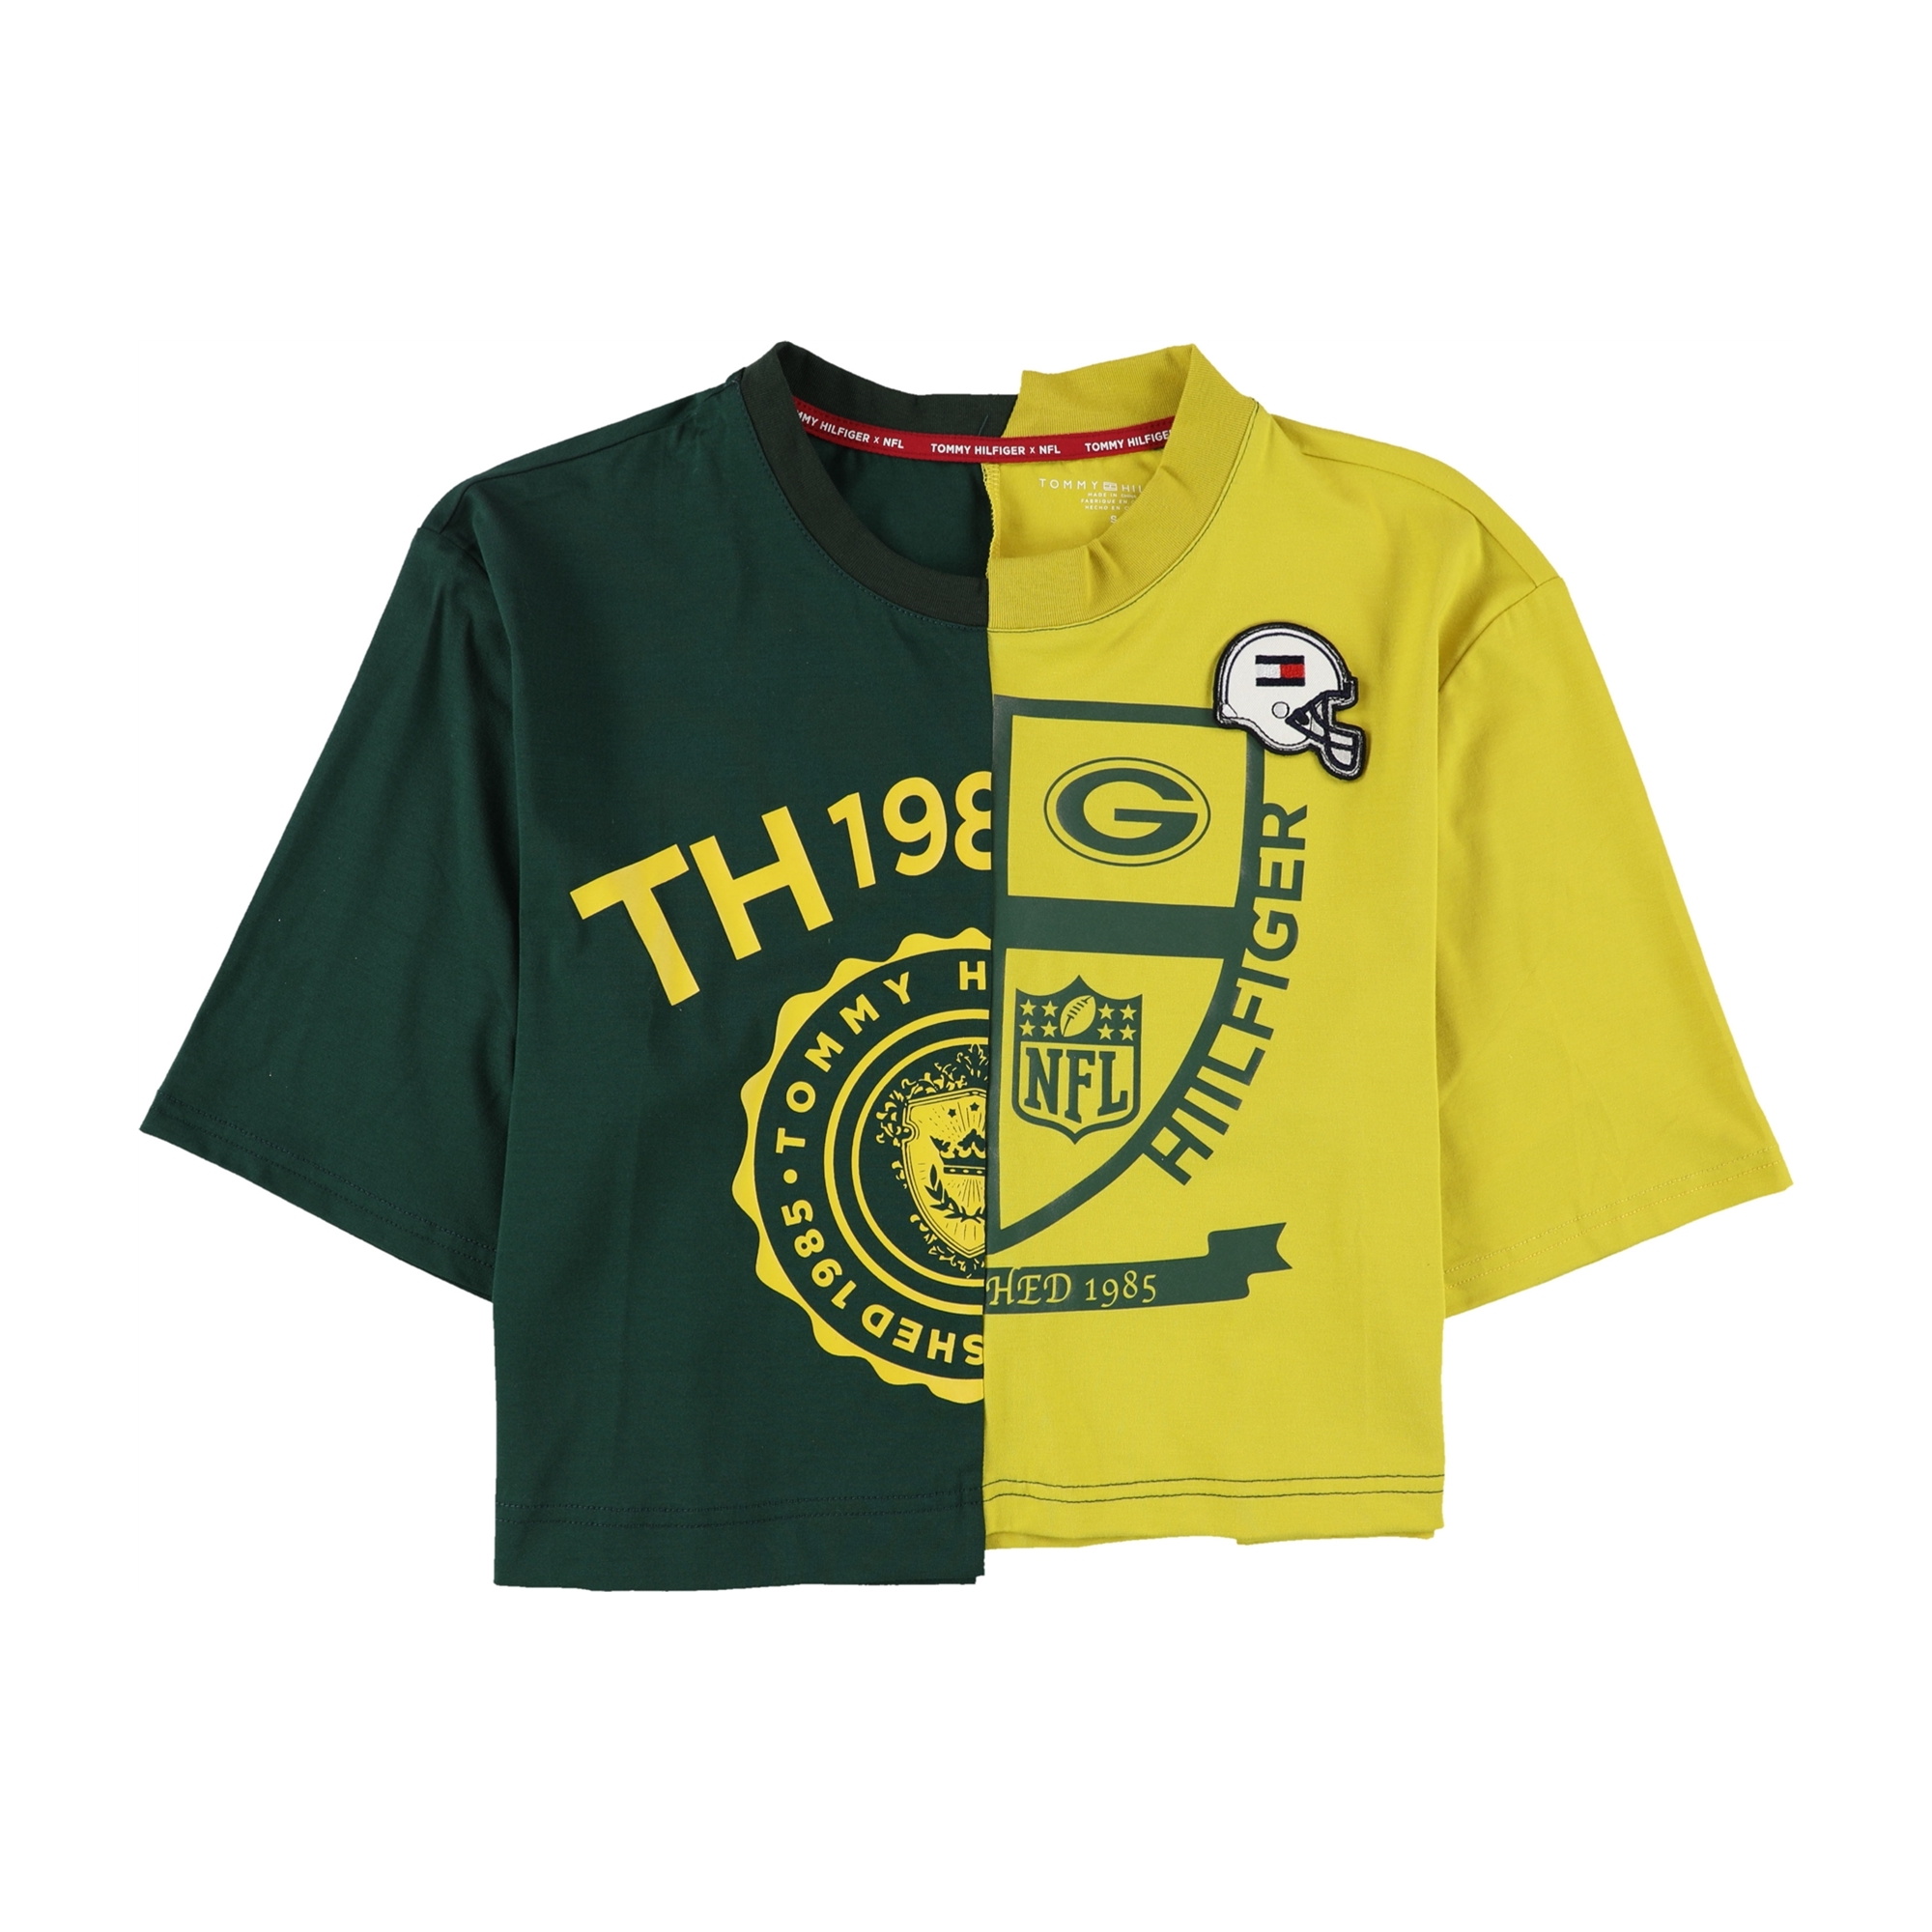 Mitchell & Ness Men's World Series 2000 T-Shirt in Green - Size XL